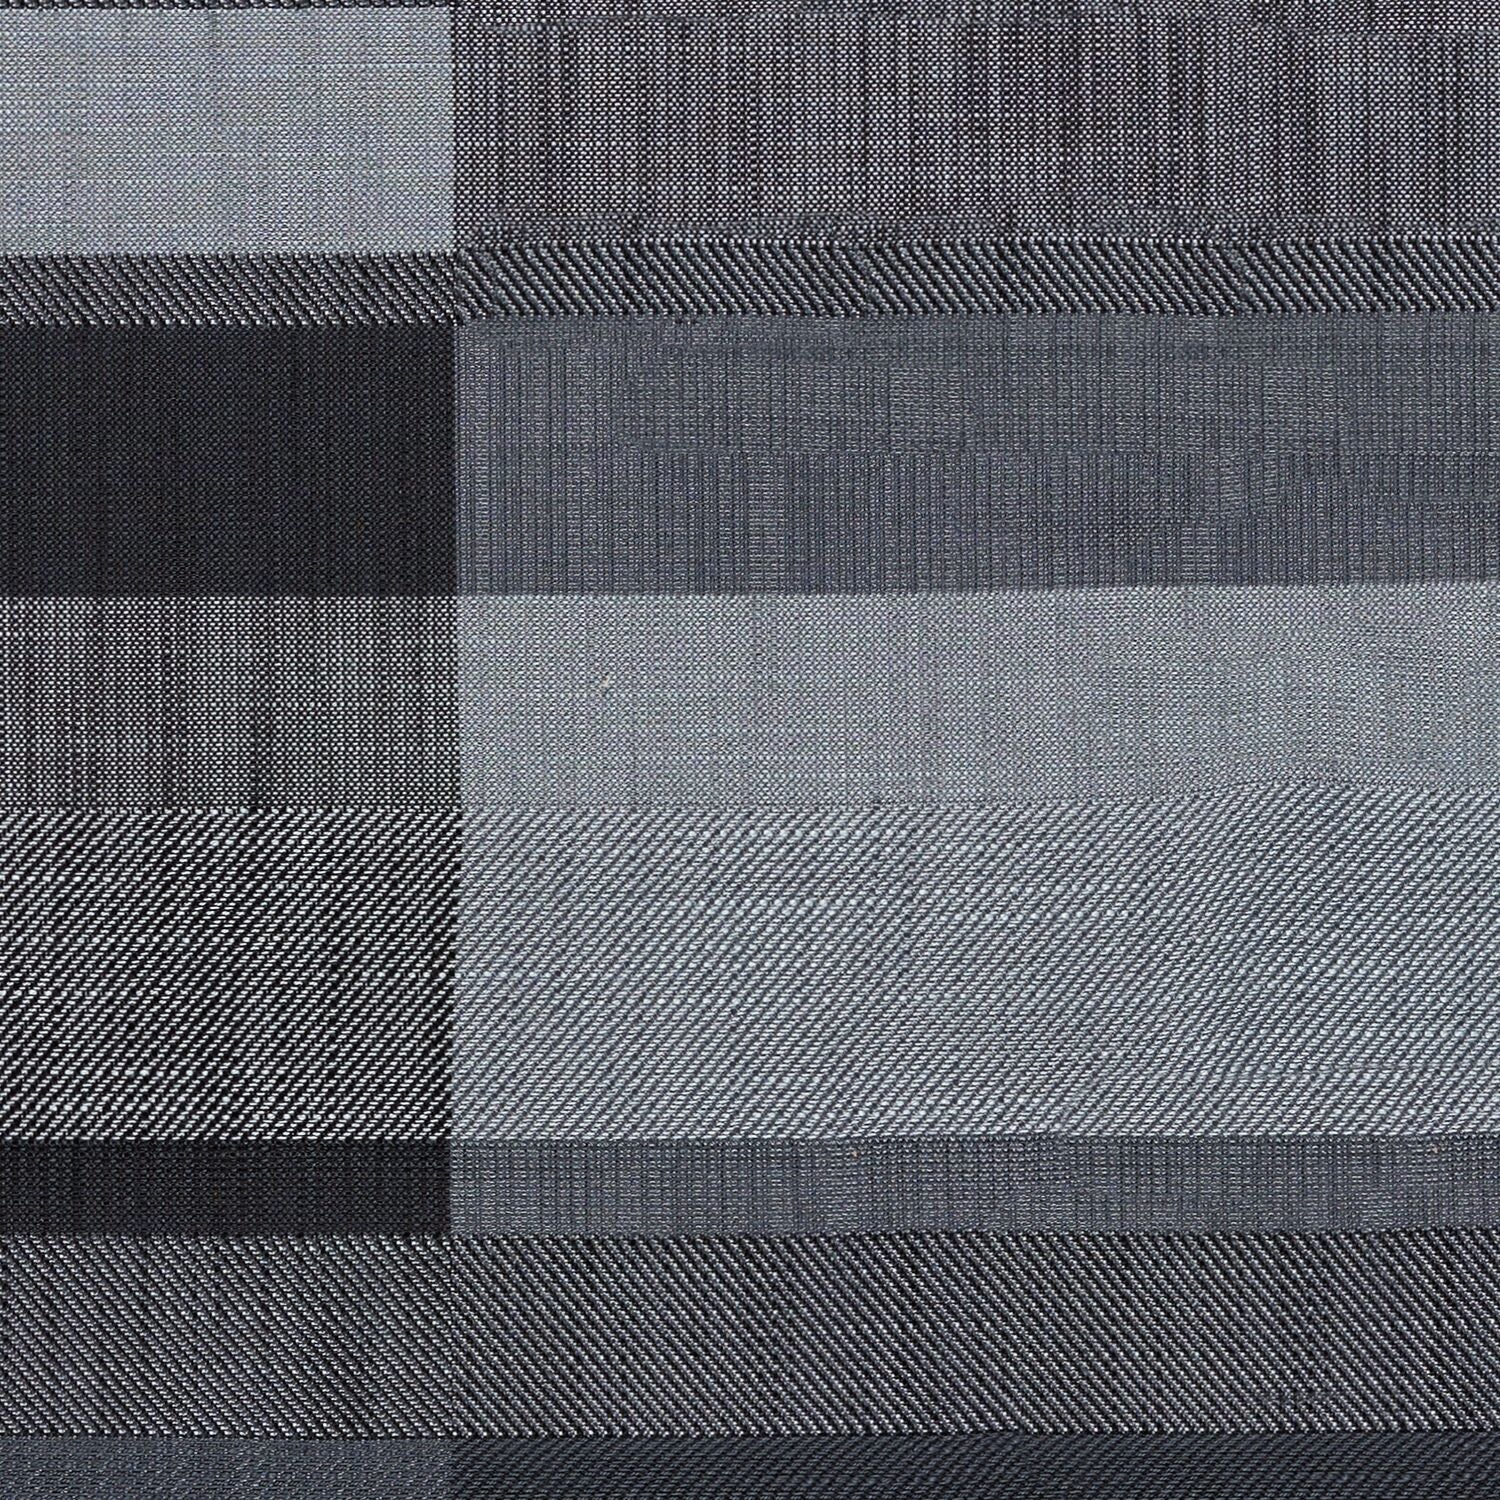 Swatch — Shadow Stripe Handloom Cotton